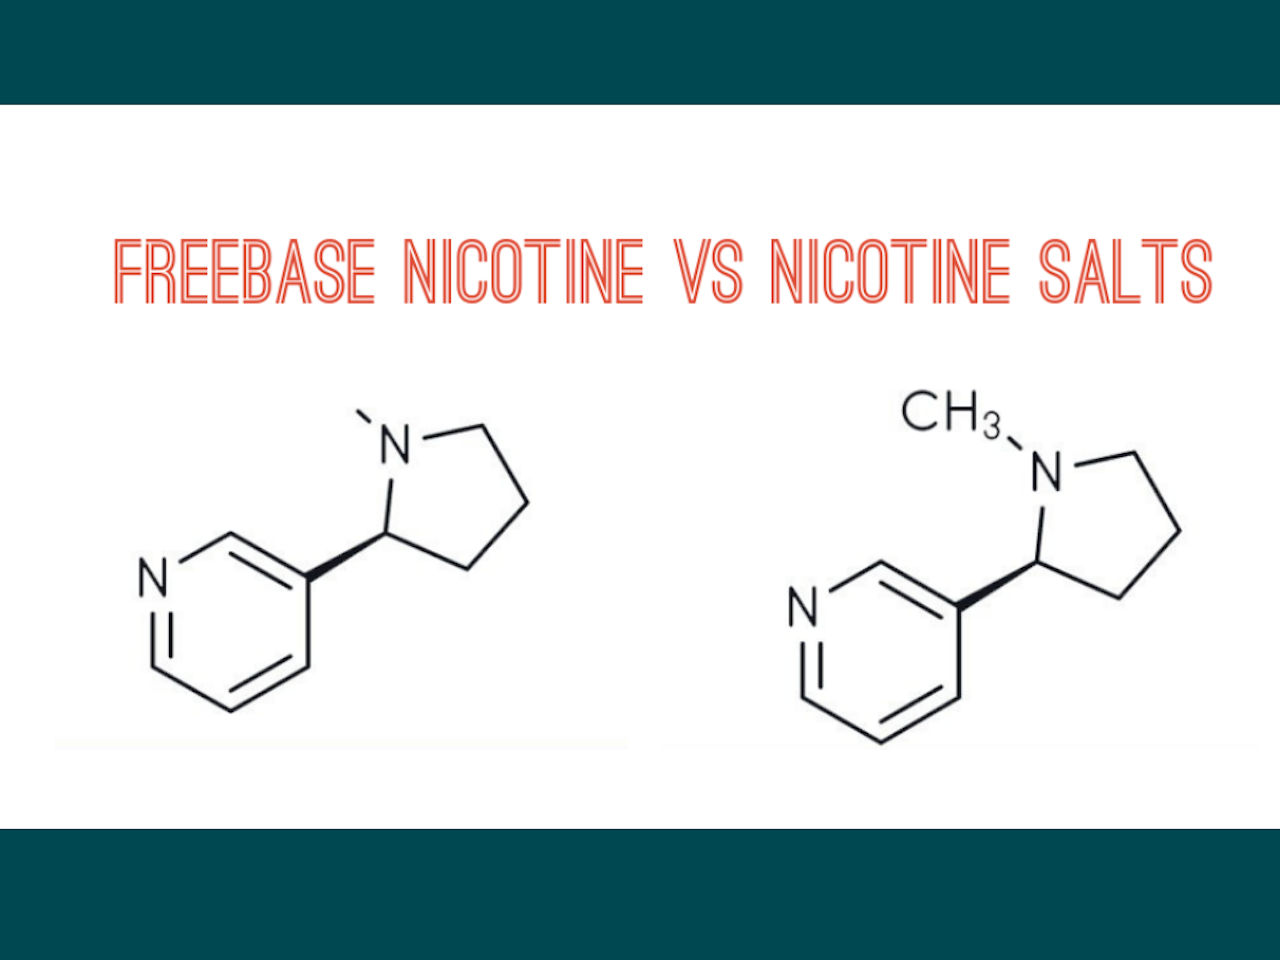 Taudientu_So-sanh-tinh-dau-freebase-nicotine-va-nicotine-salt_1